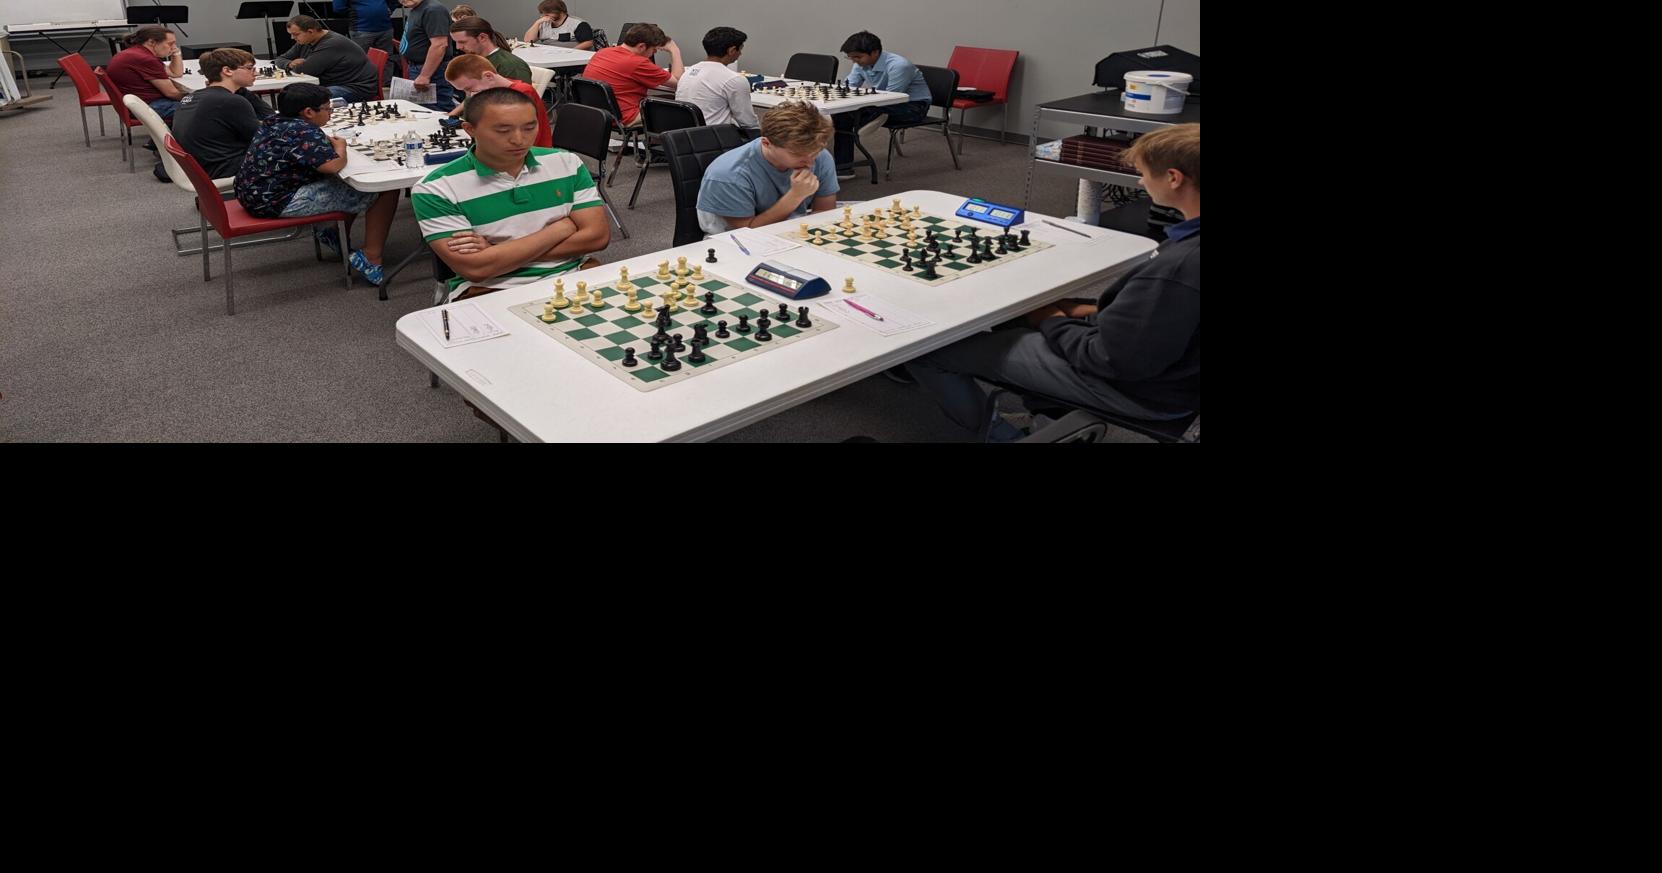 Central Florida Chess Club